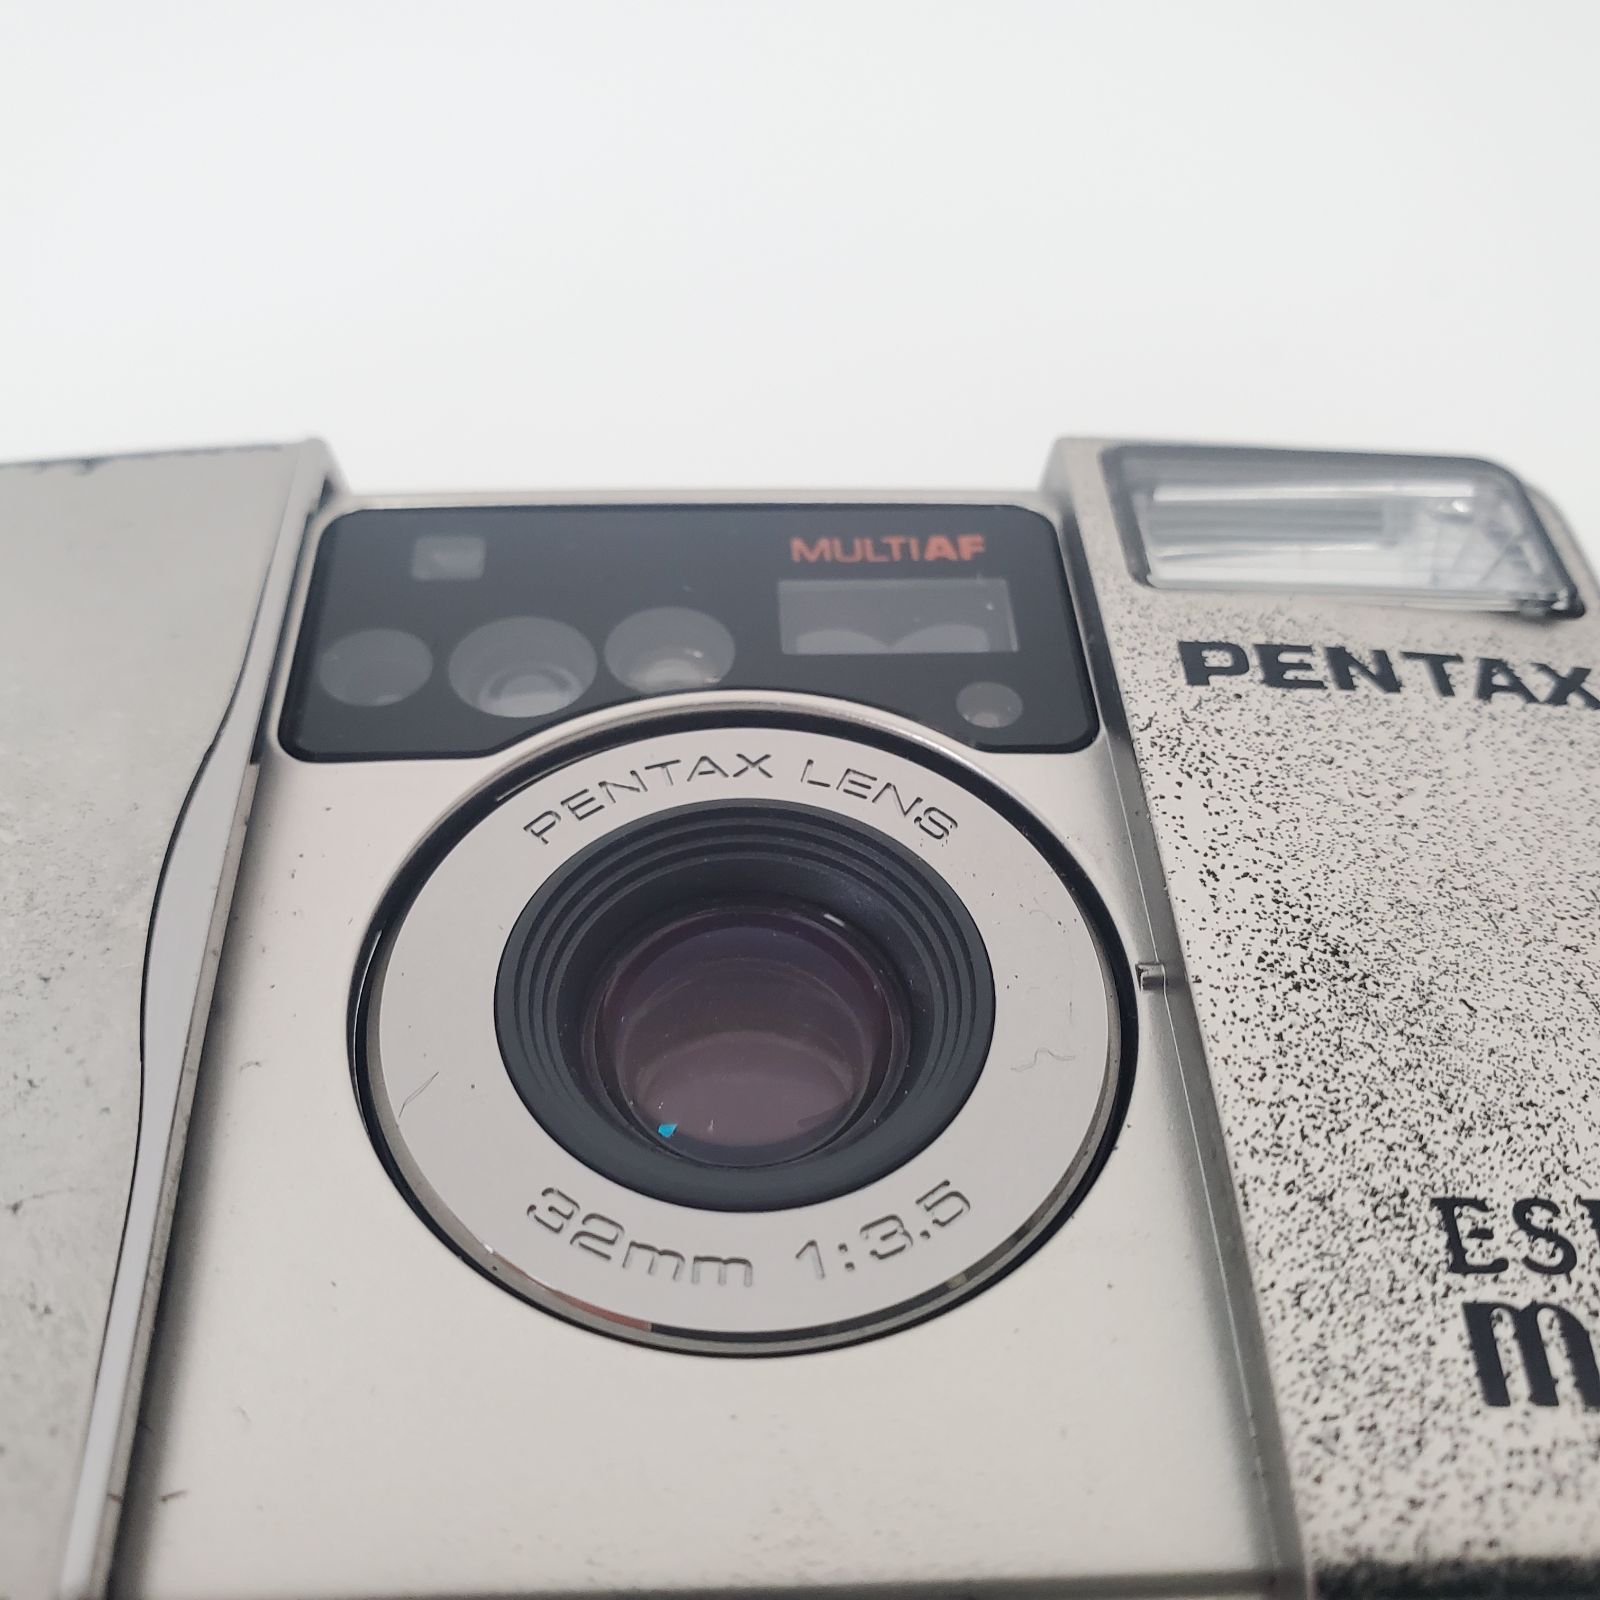 PENTAX ペンタックス  フィルムカメラ ESPIO mini